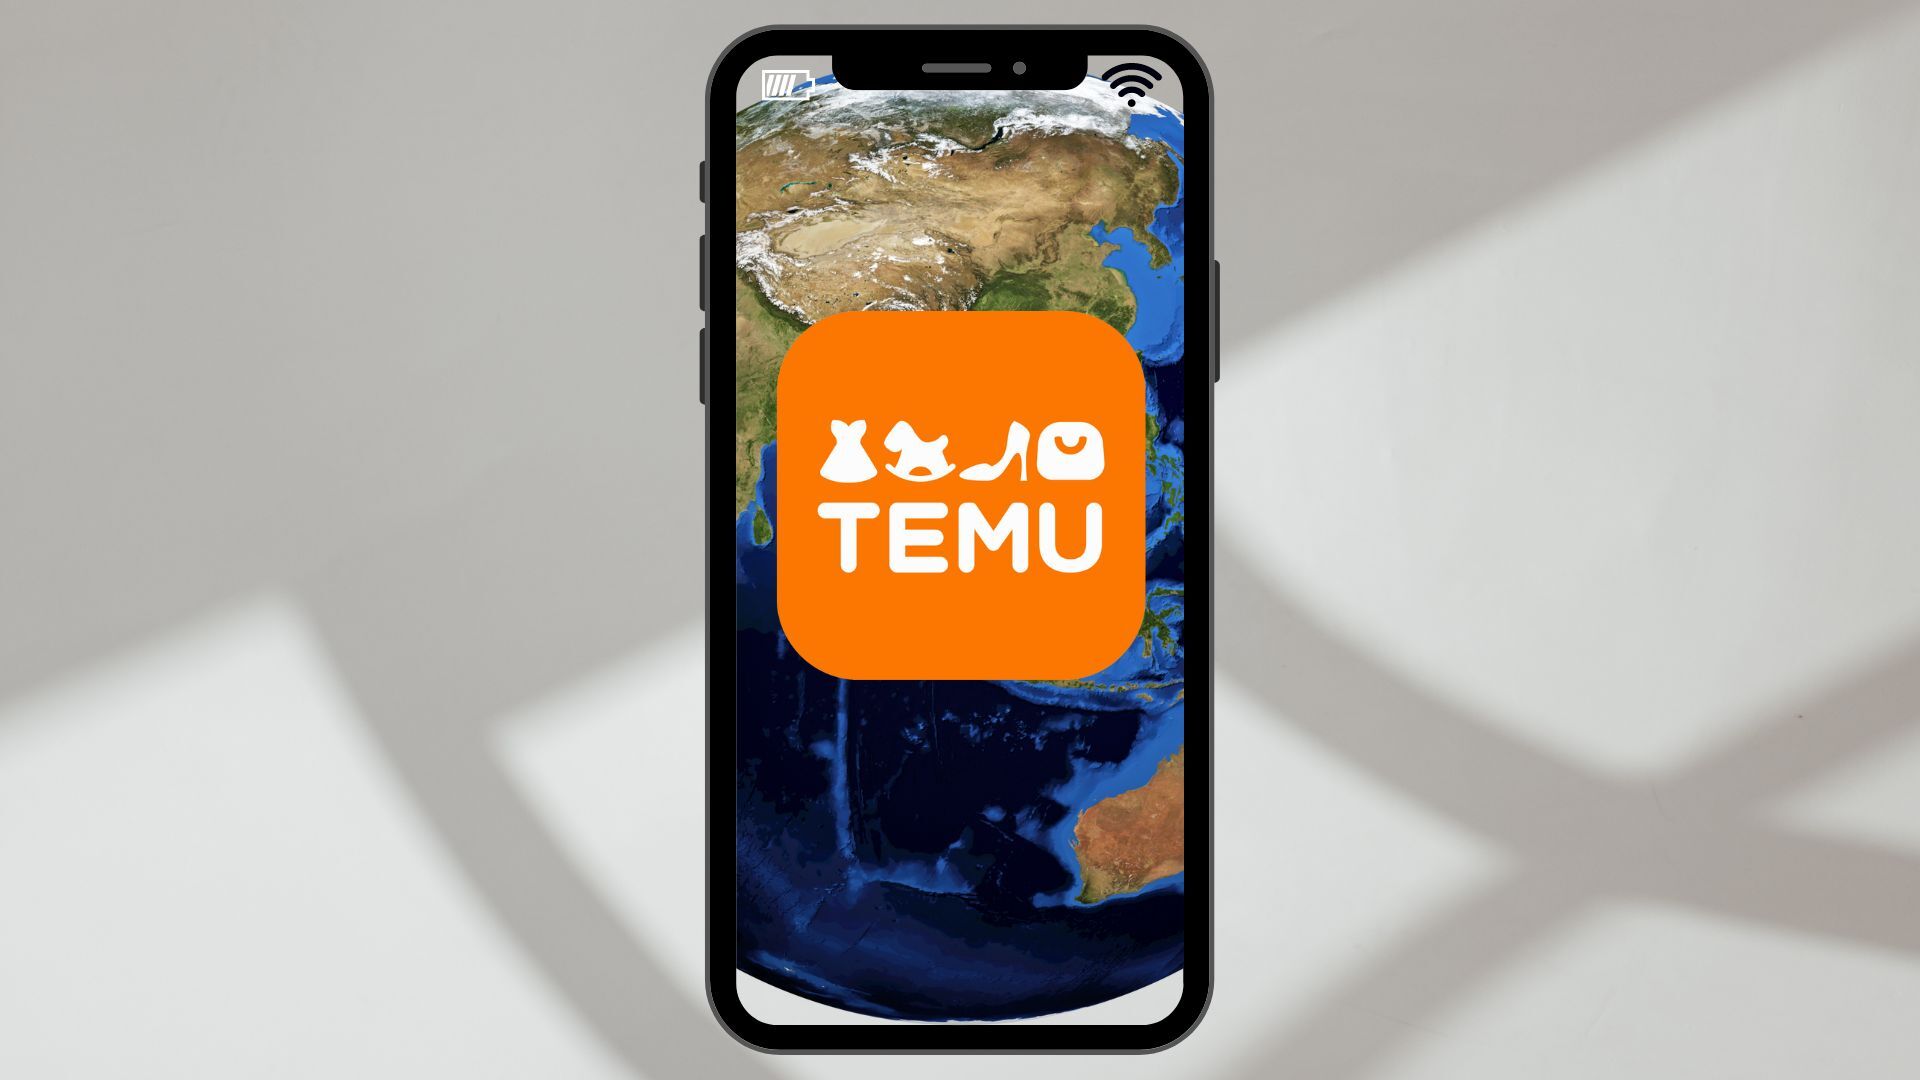 Is Temu safe? Legitimacy of the Temu app and website